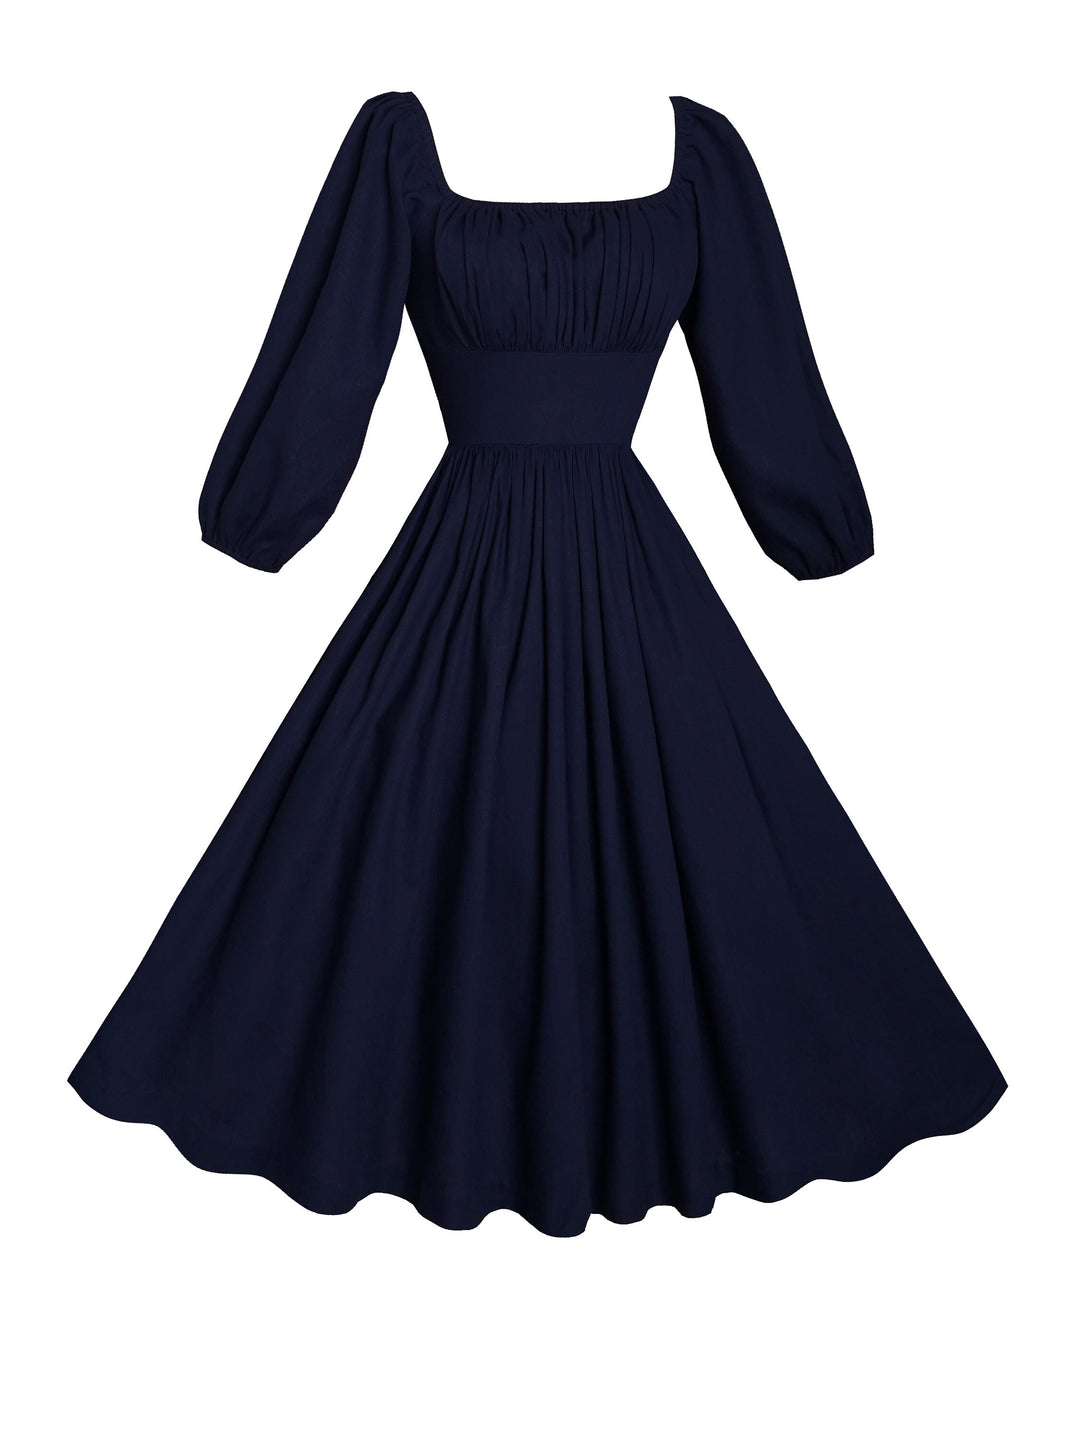 MTO - Sydney Dress in Indigo Blue Linen